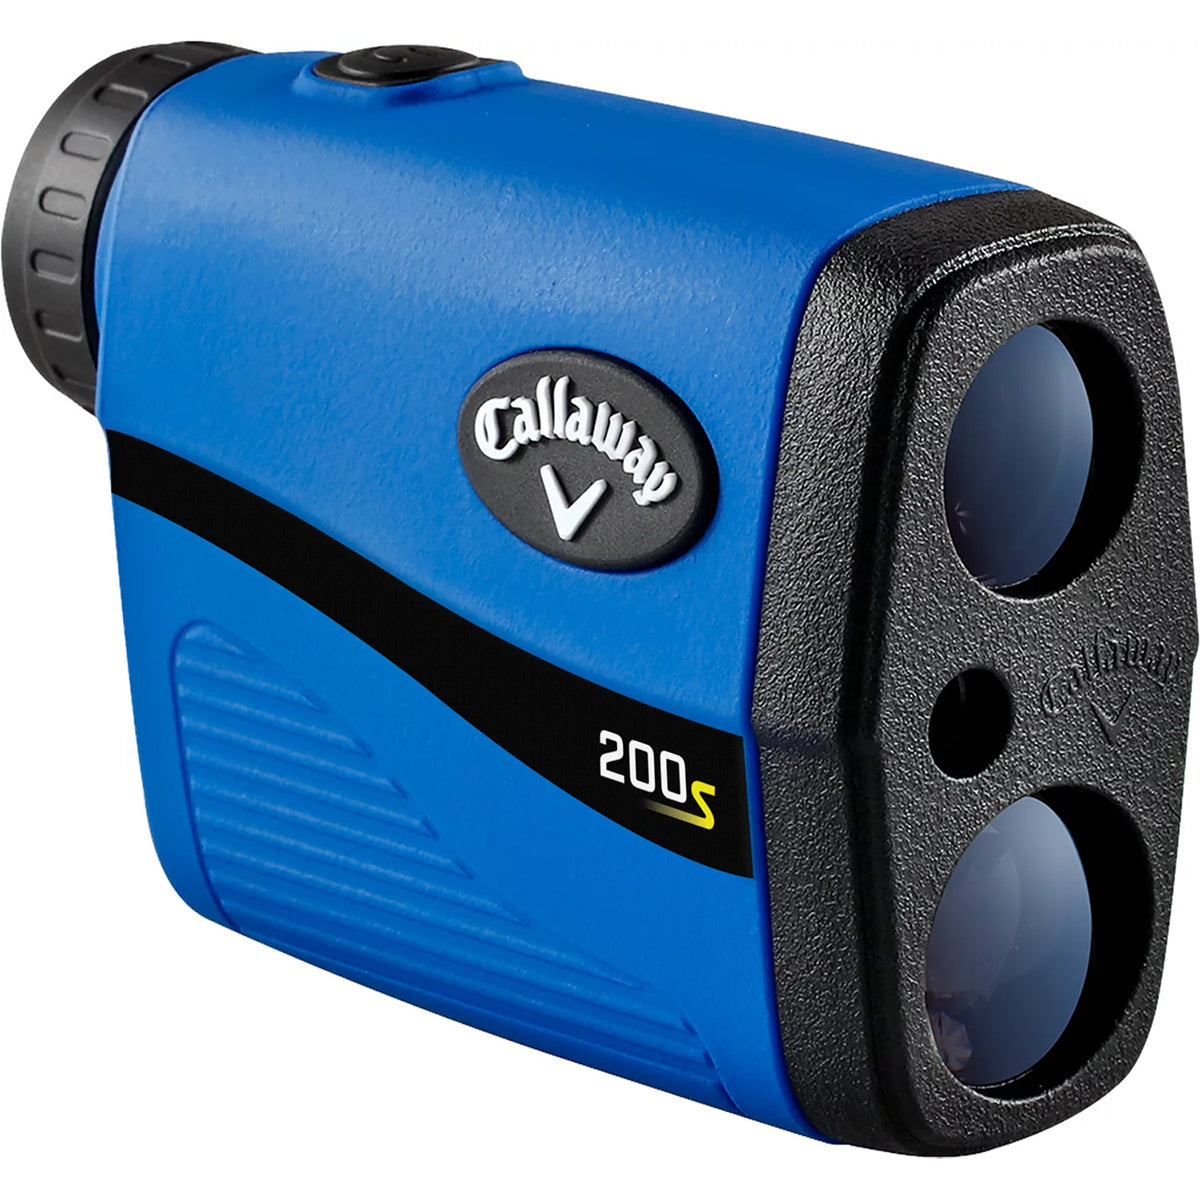 Callaway Golf 200s Slope Laser Rangefinder Callaway